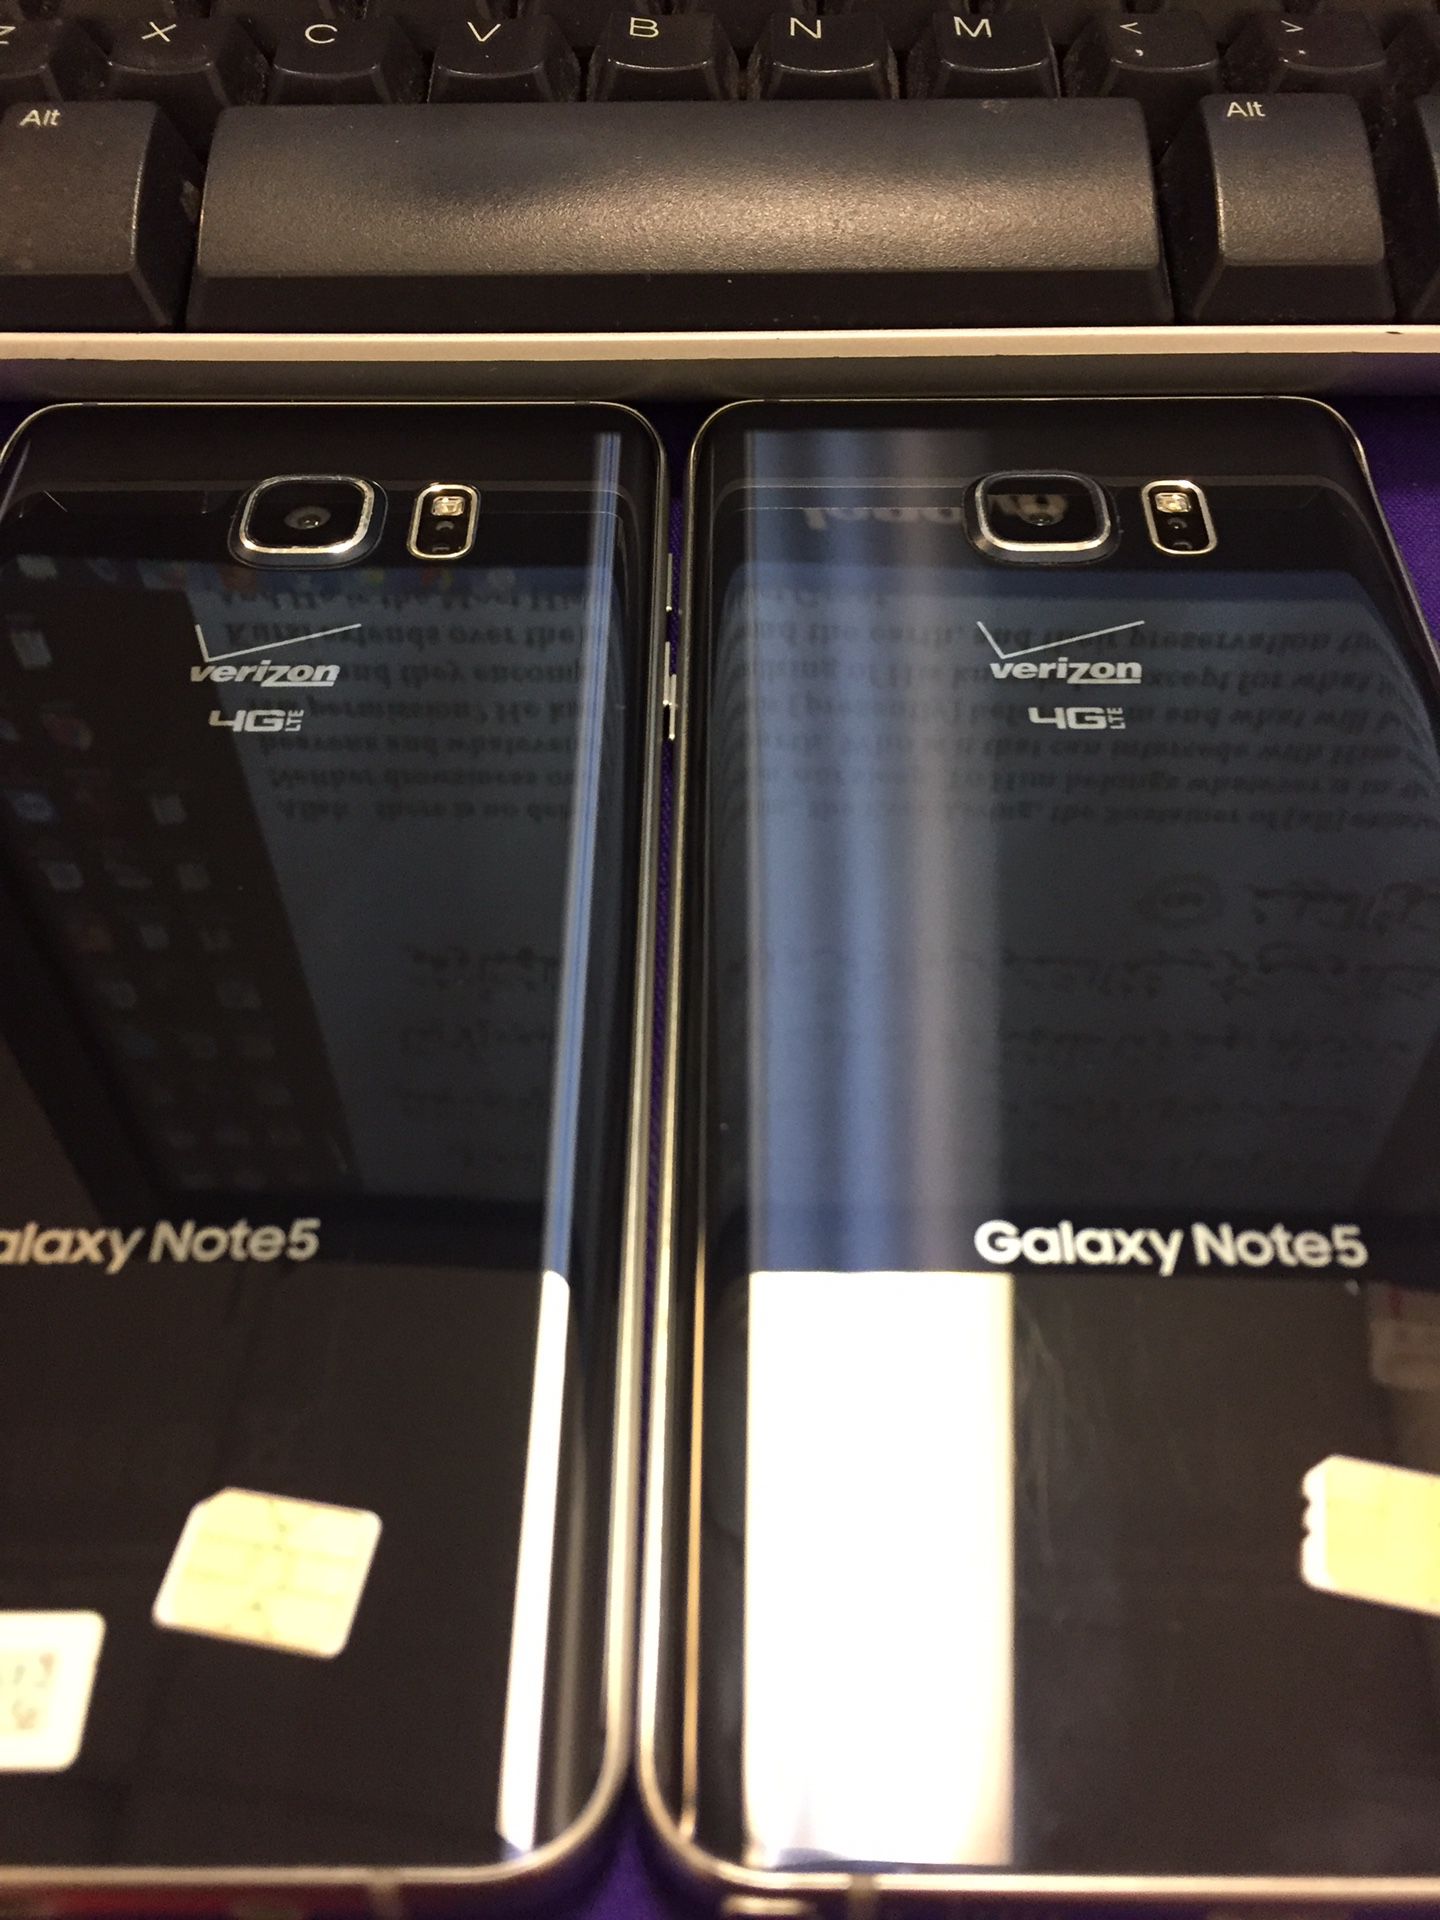 On sale unlocked Galaxy Note 5 with warranty!